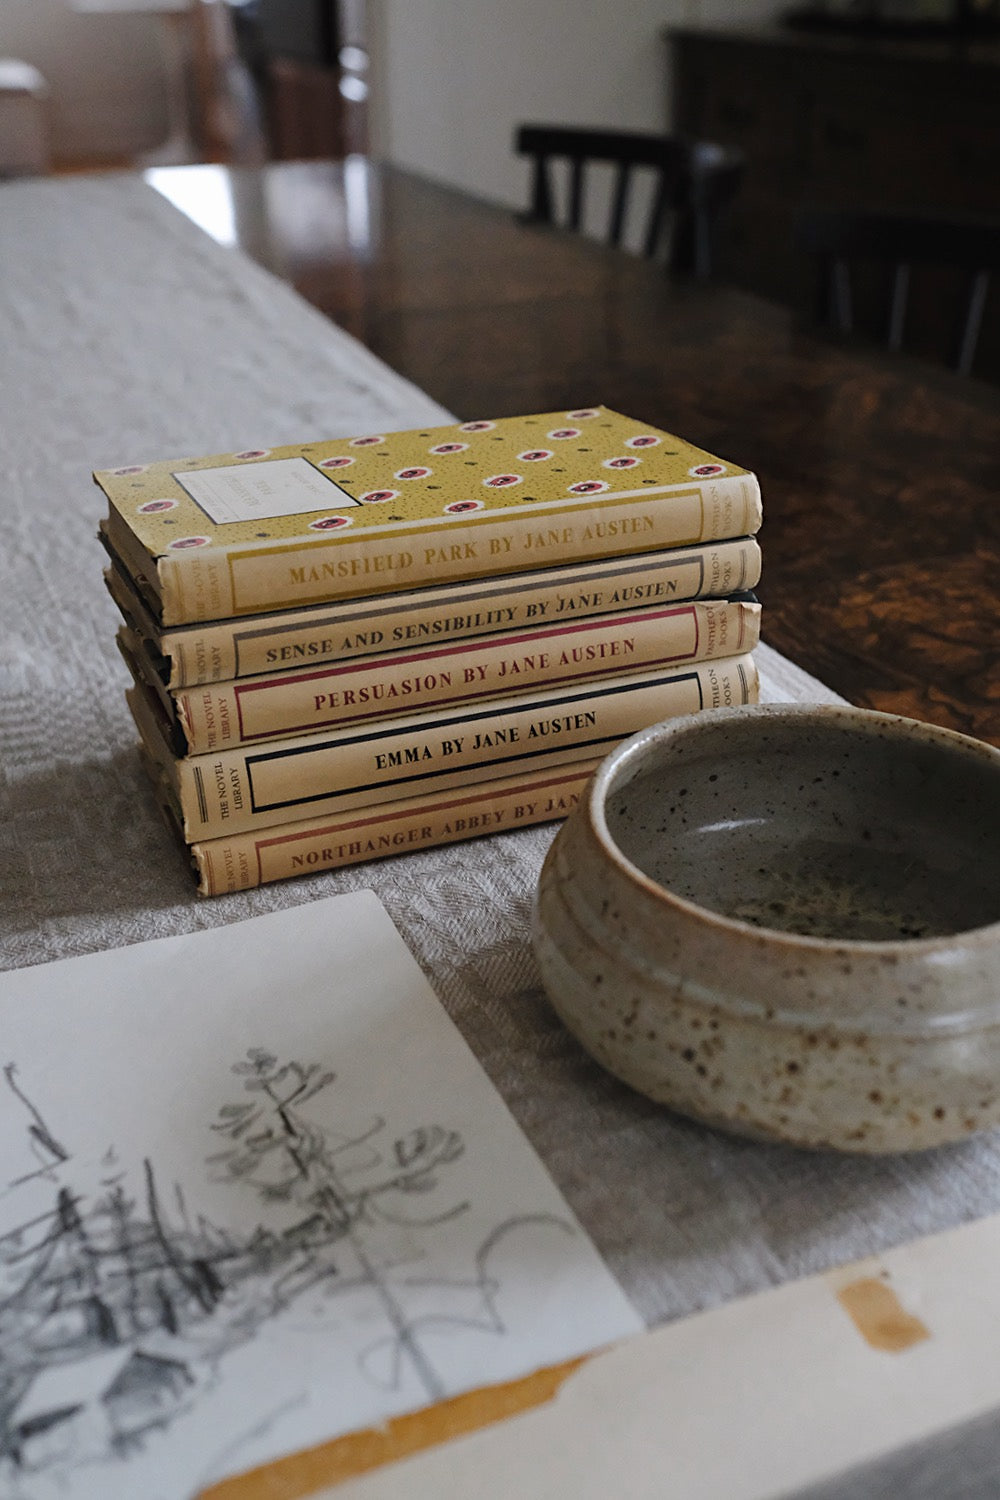 set of 5 Jane Austen books